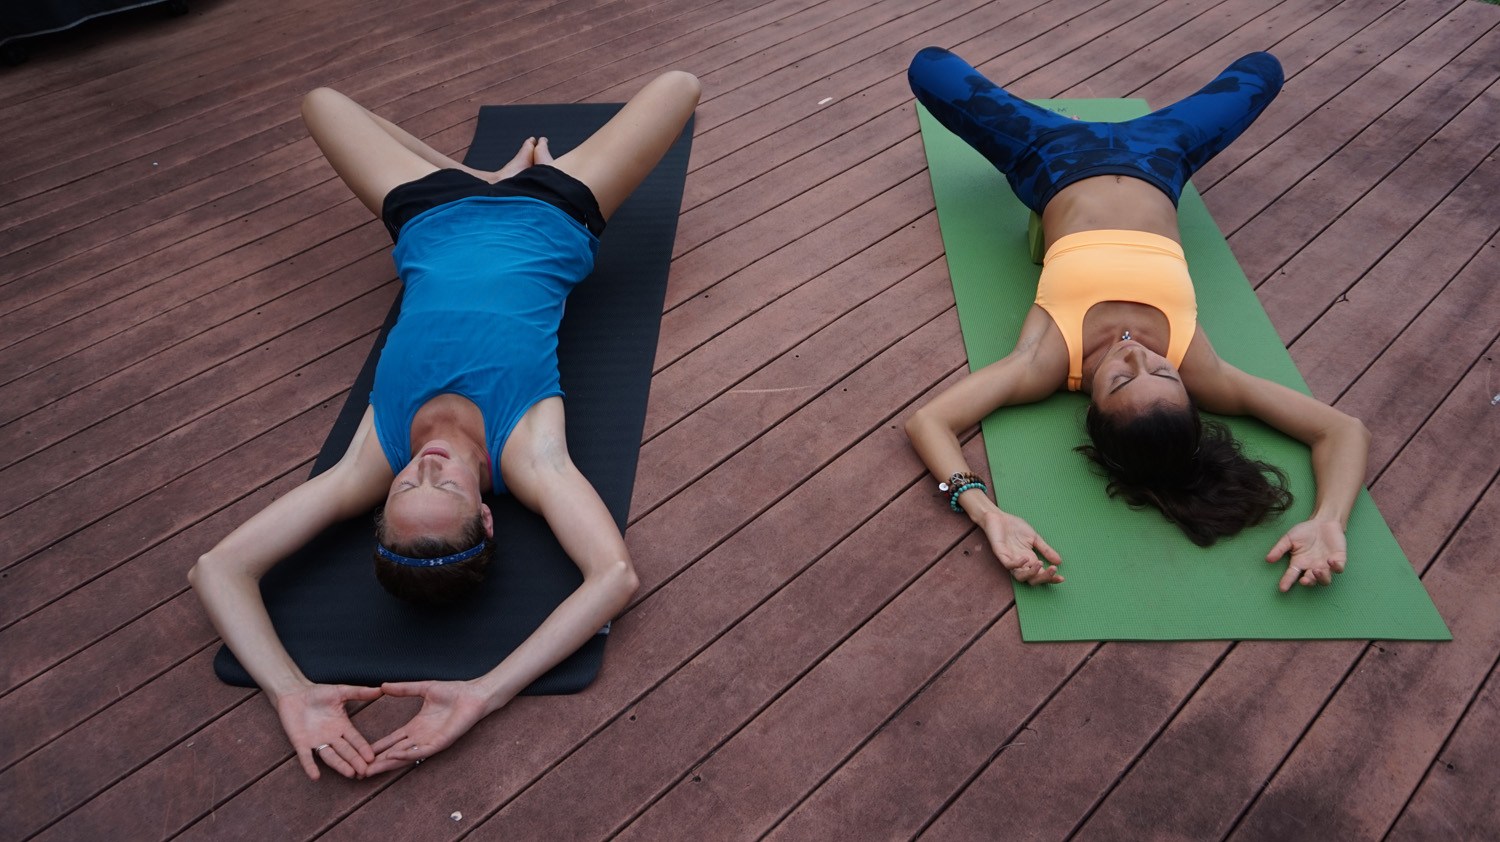 TwentyFour Seven Yoga Mats — Yoga for 2: Seven Yoga postures beginner  level, to do with your partner